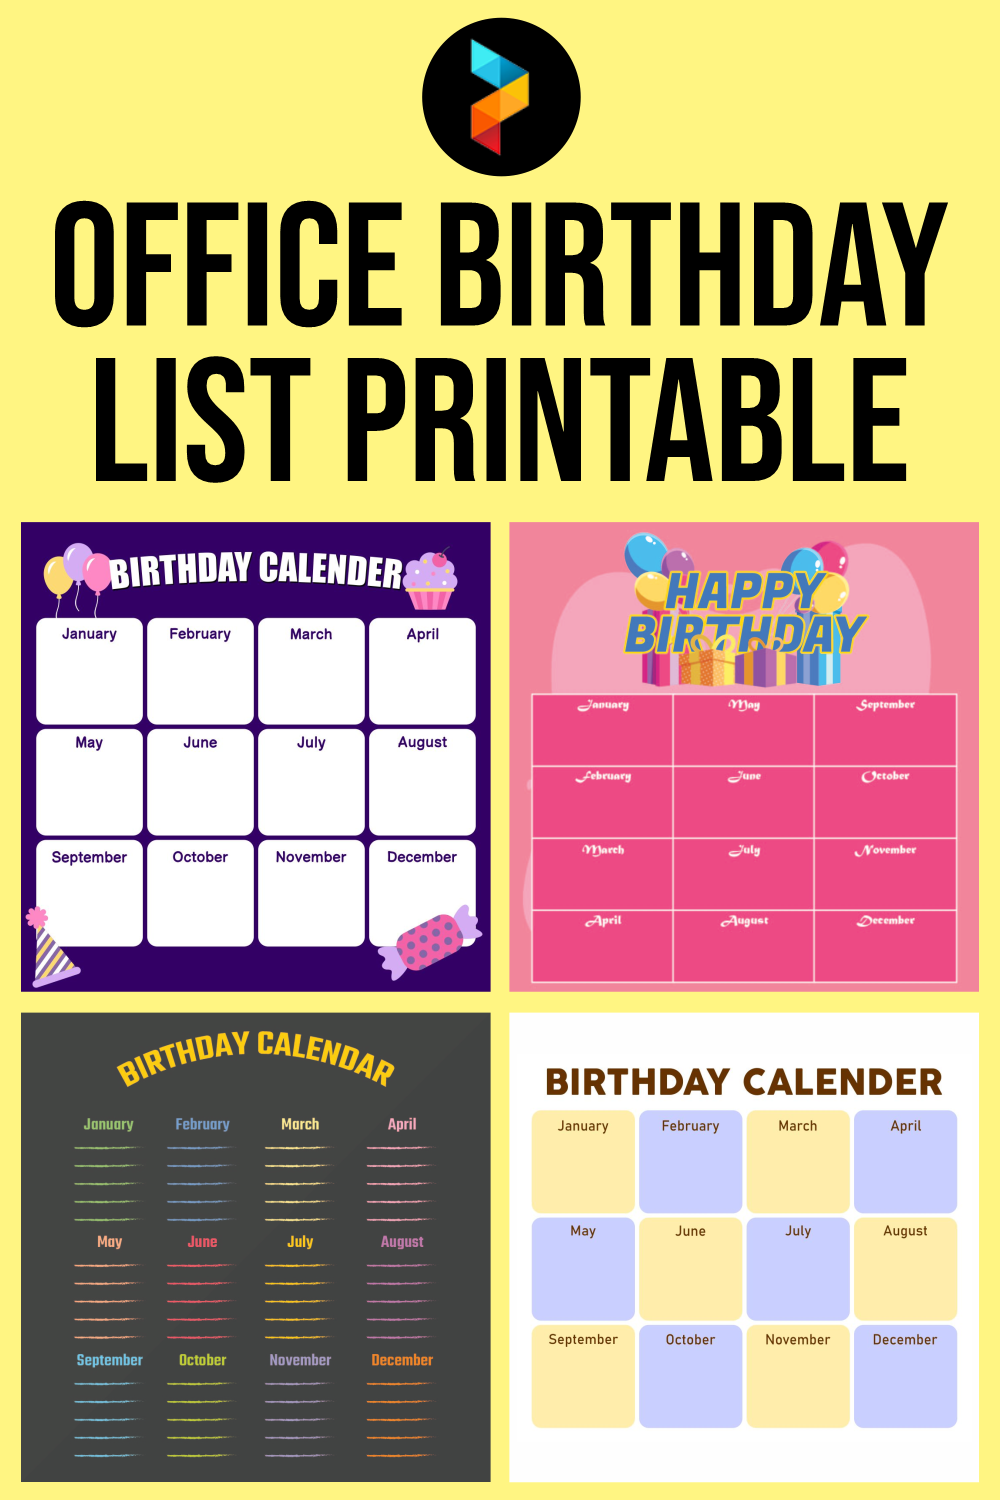 Office Birthday List Printable